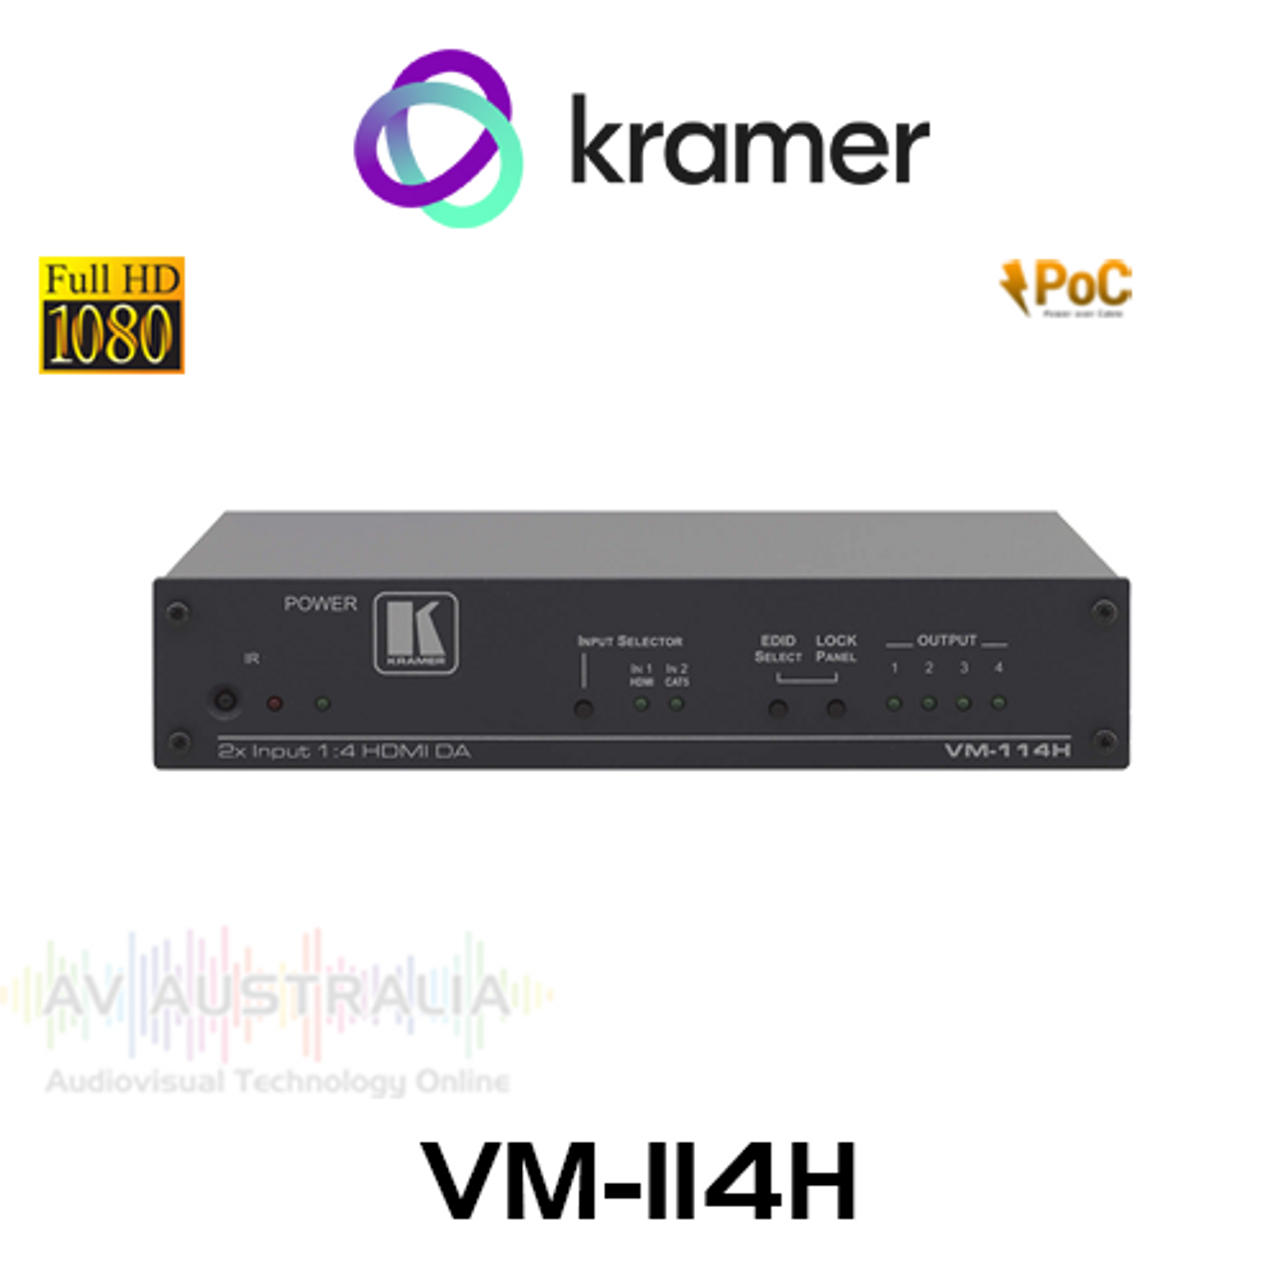 Kramer VM-114H 2x1:4 HDMI Over DGKat Distribution Amplifier